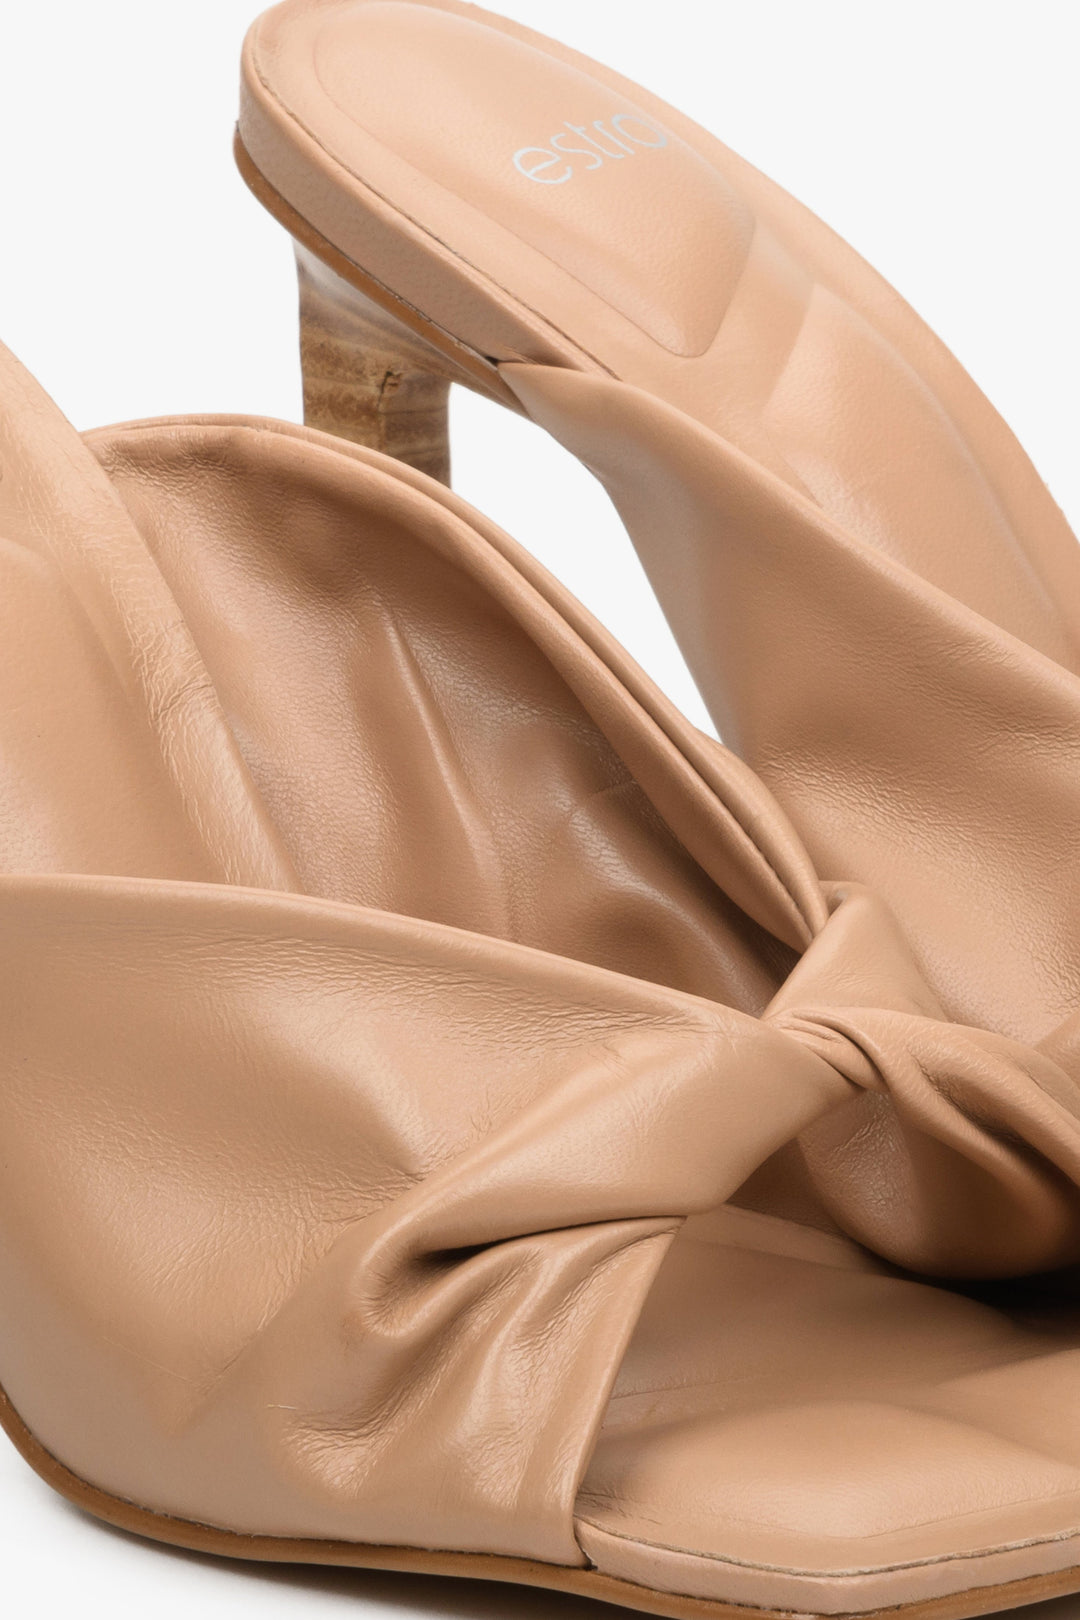 Women's beige high heel mules by Estro - close-up on details.